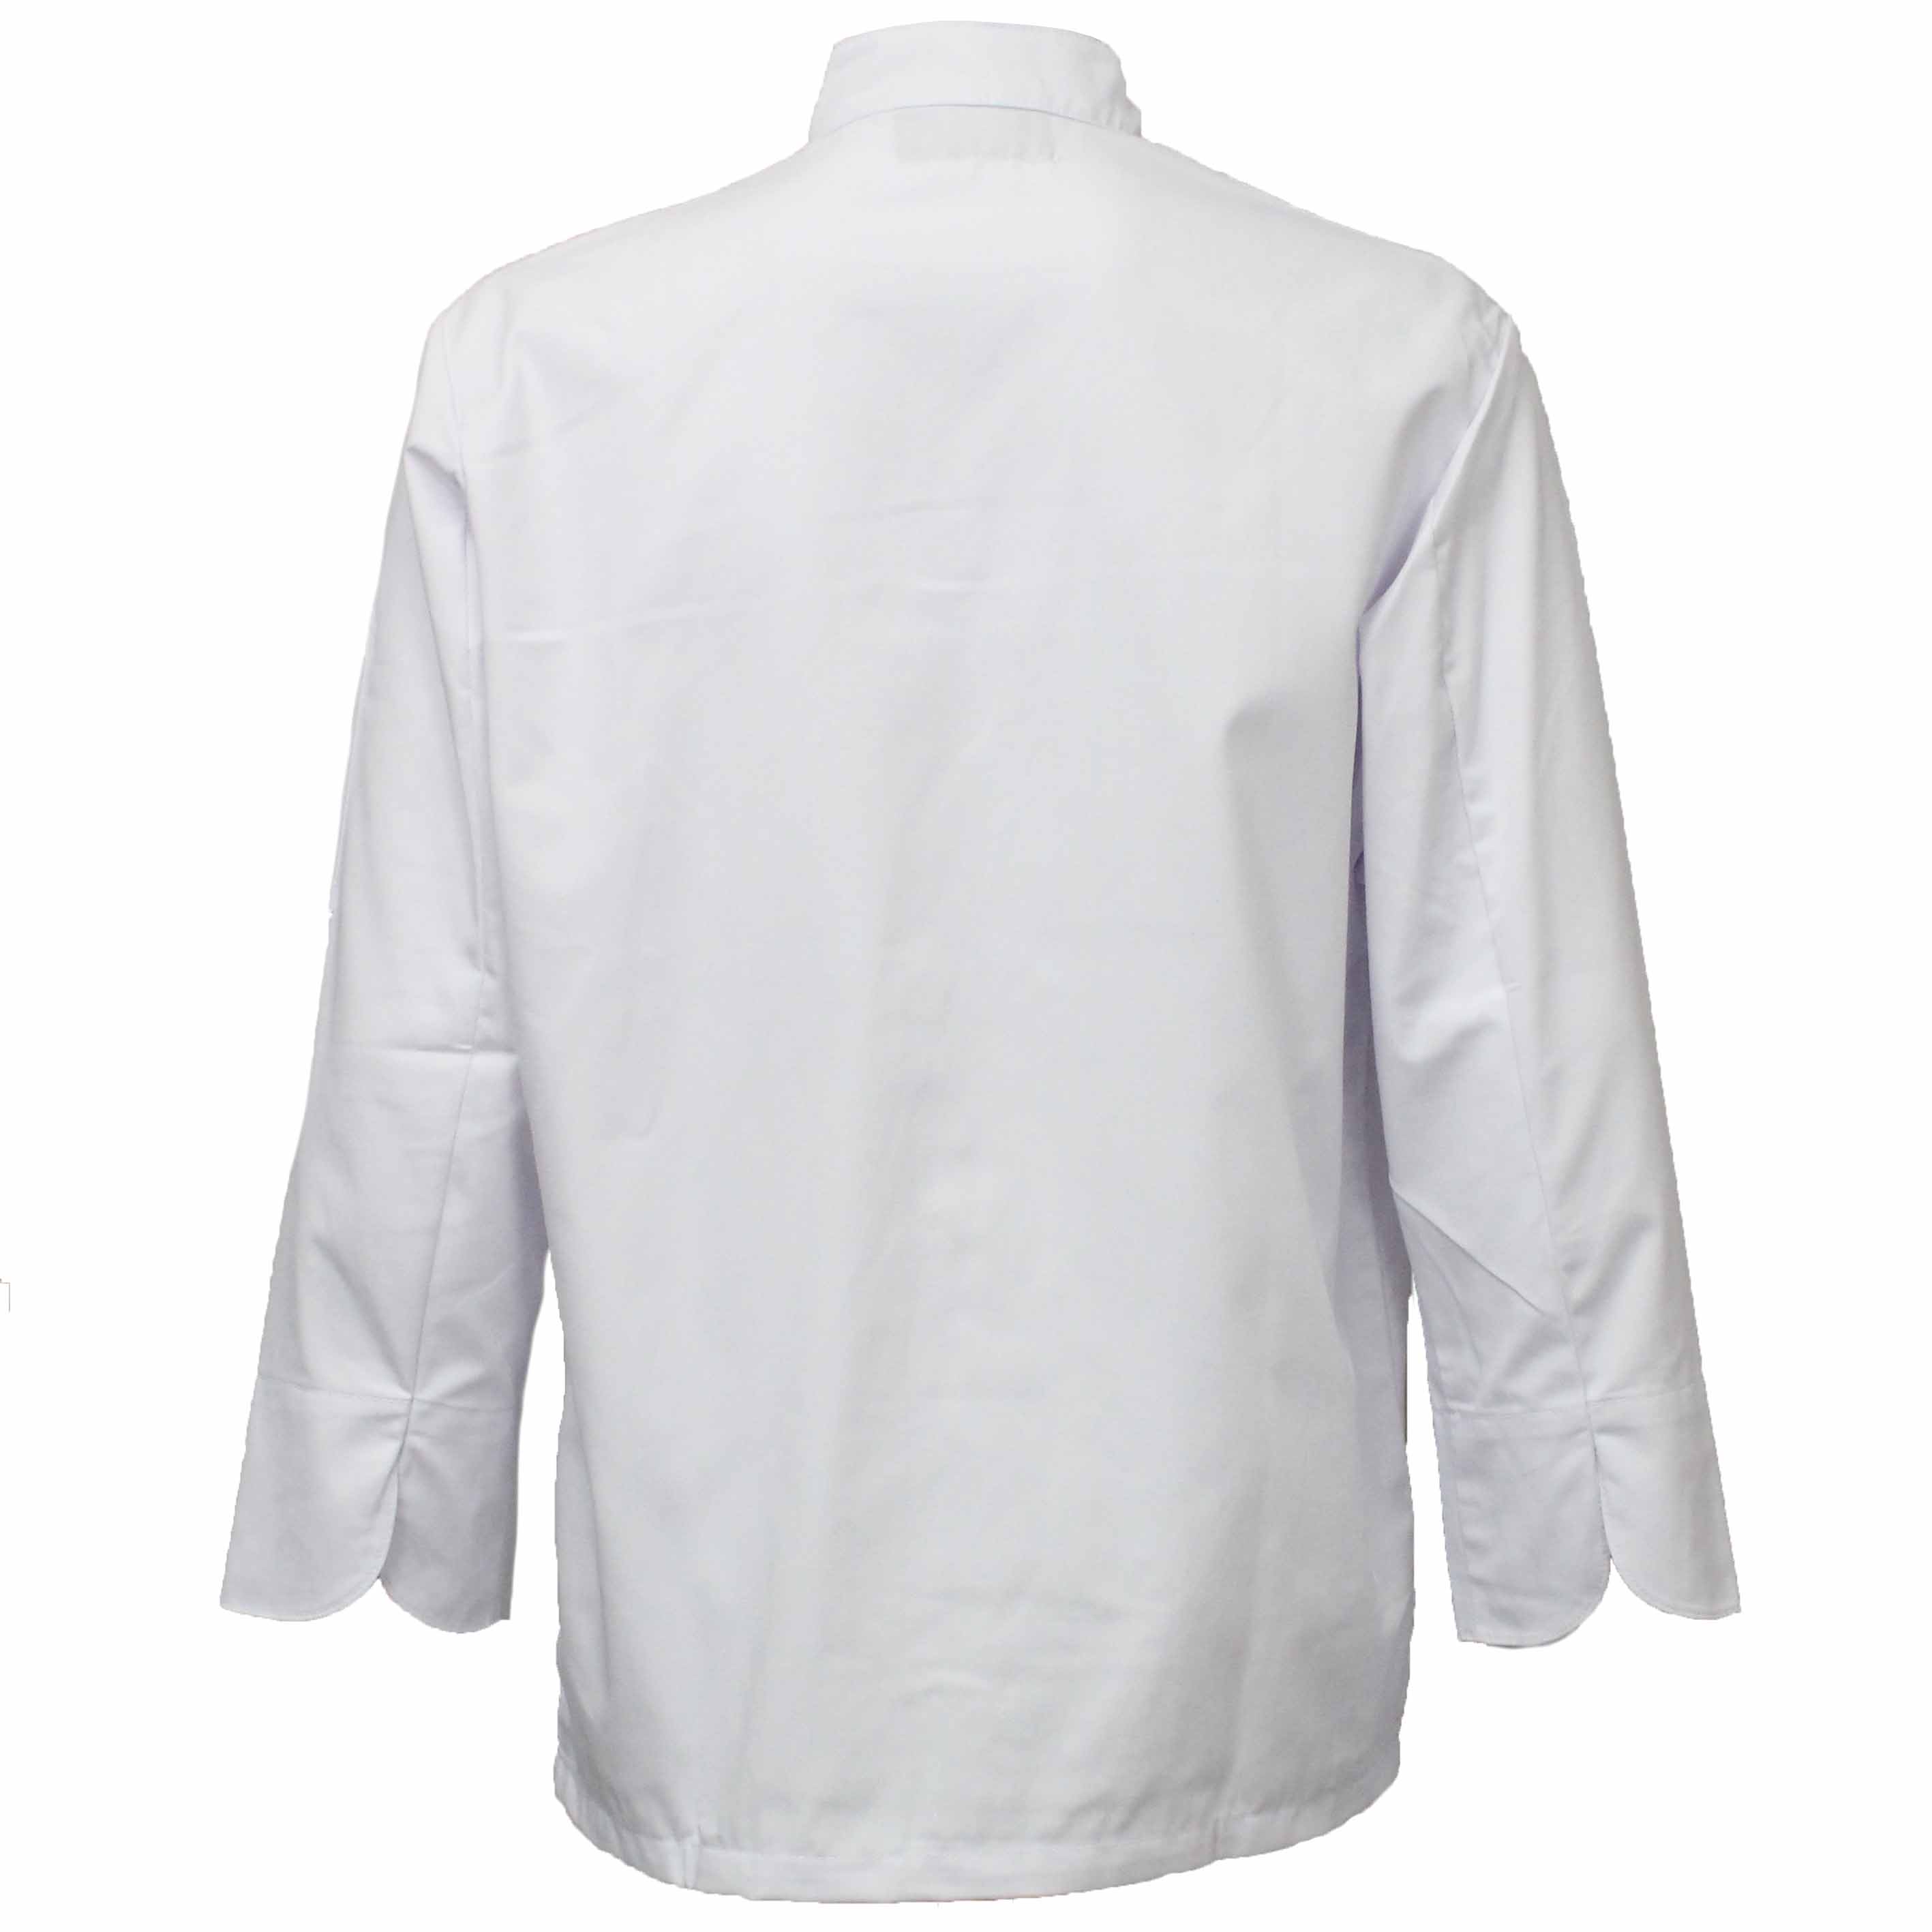 Premium Uniforms 5300 Econo - White Chef Coat with Long Sleeves ...